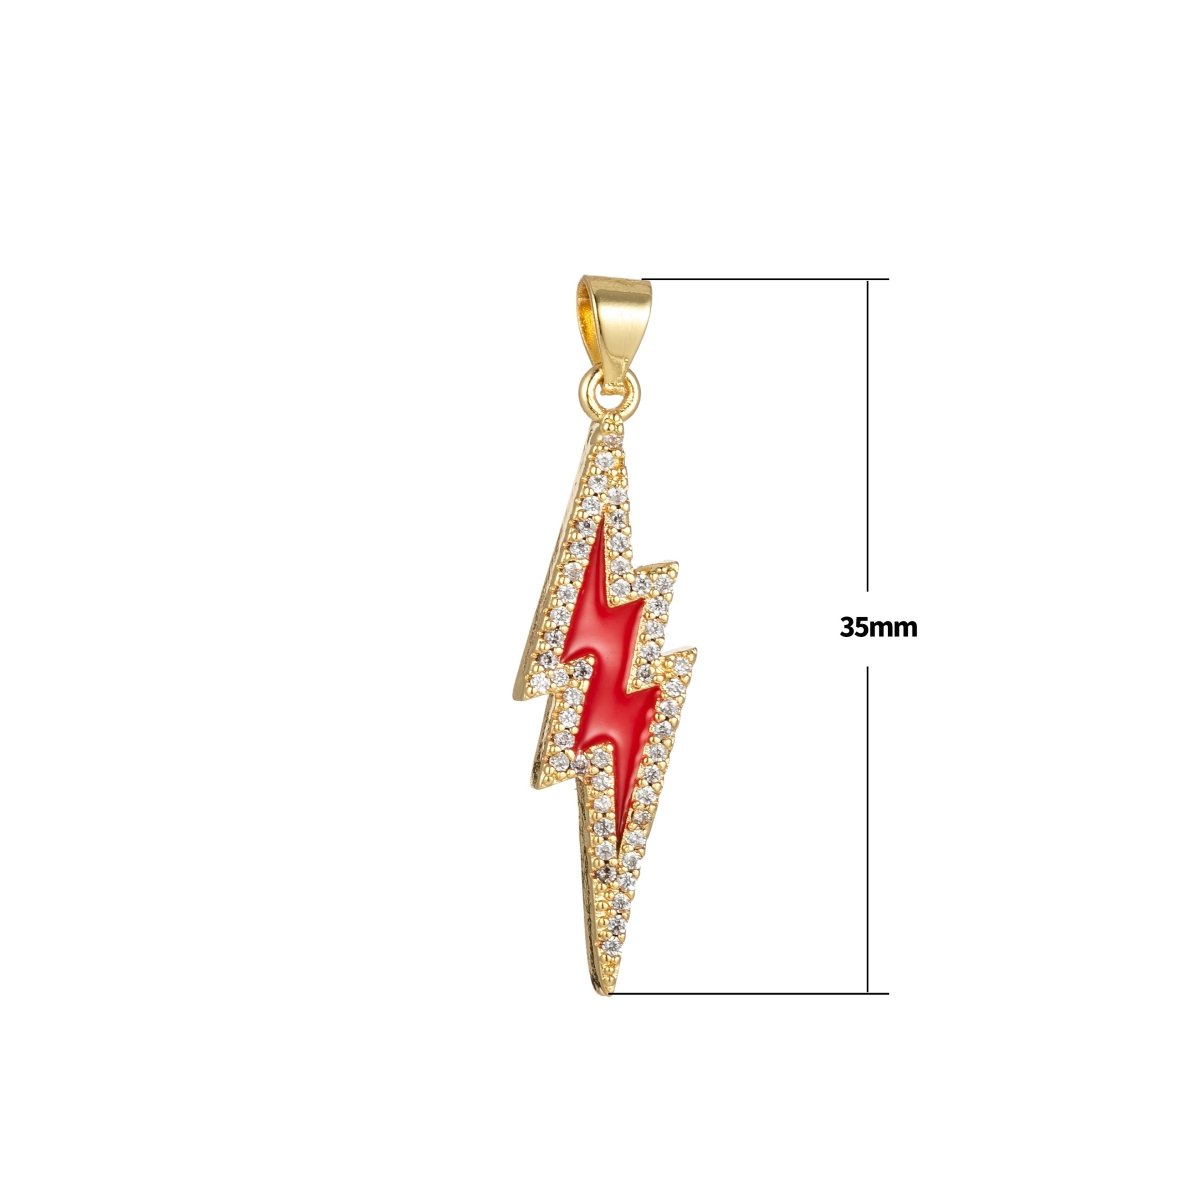 Enamel Lighting Gold Micro Pave Charm Lightning Bolt Pendant, Statement Bold Bolt, Wizard Charm, Thunder Pendant for Necklace H-846 H-851 H-852 H-855 H-876 - DLUXCA